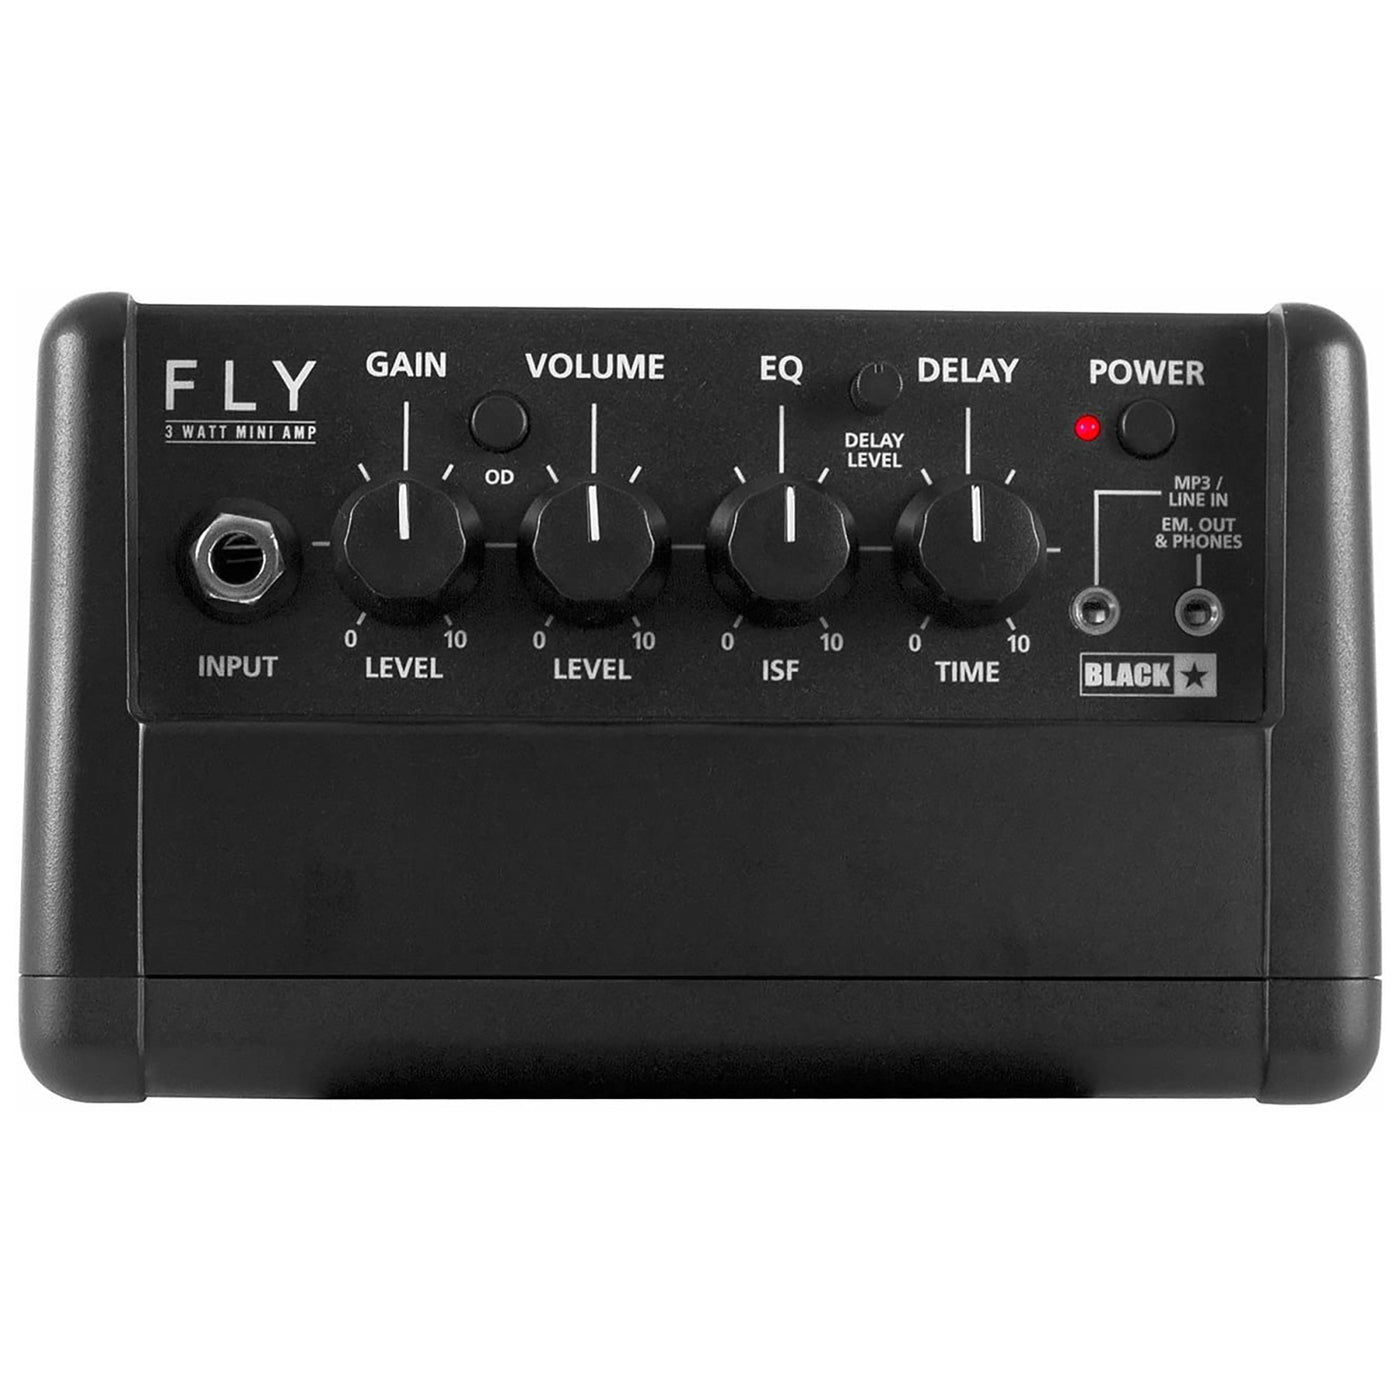 Blackstar FLY 3 Mini Guitar Combo Amplifier